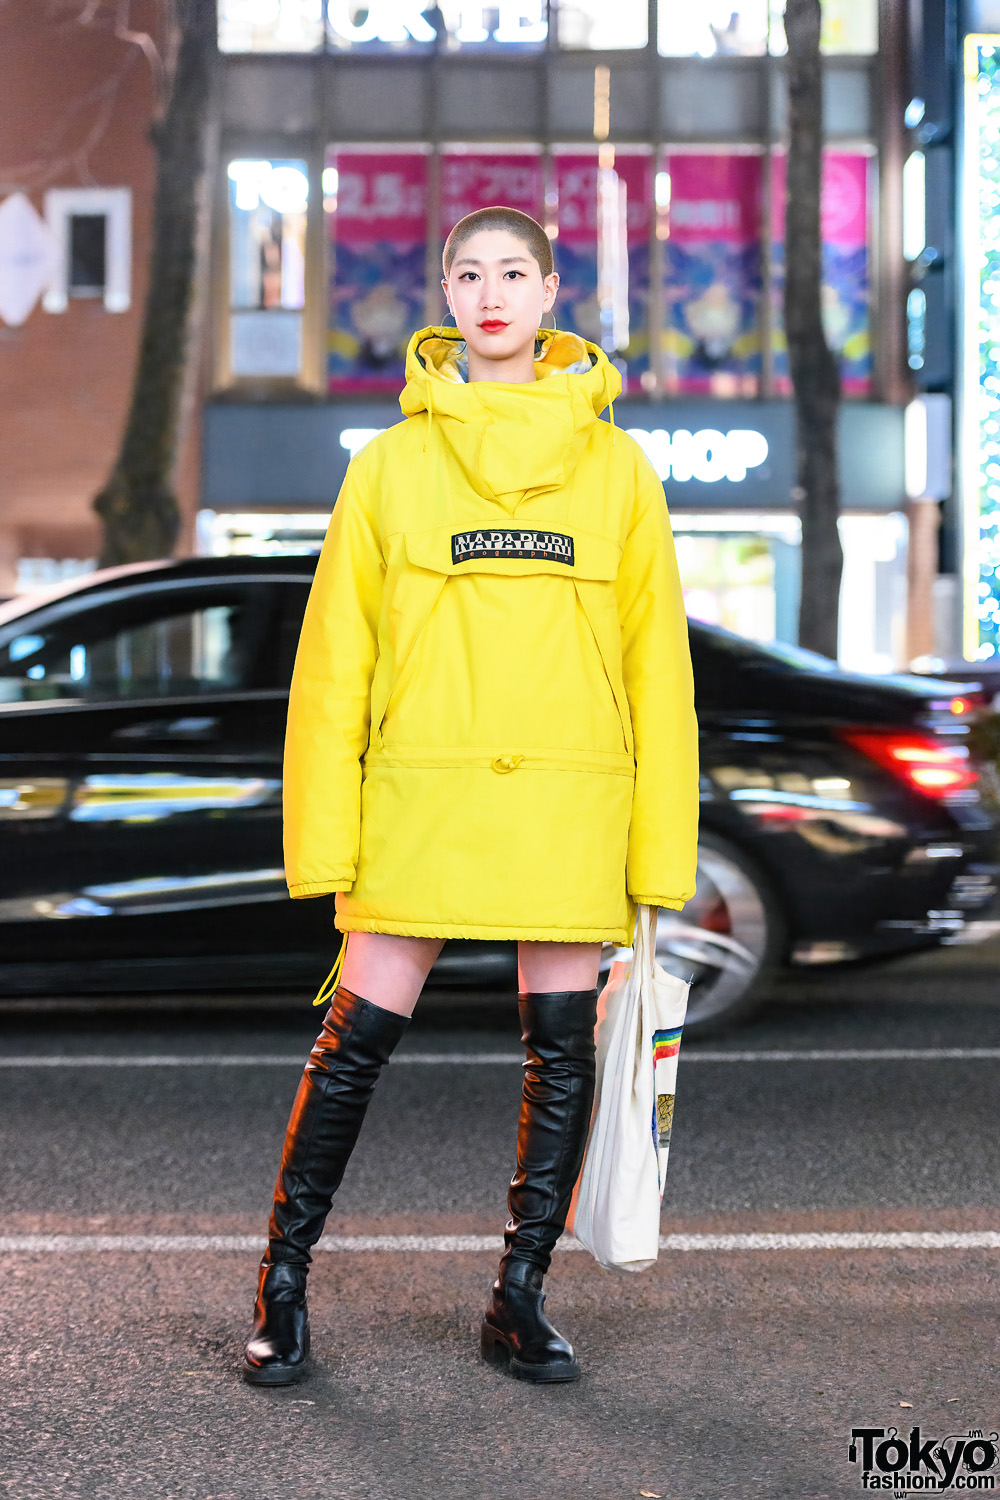 Chic Tokyo Girl Street Style w/ Shaved Head, Napapijri Skidoo Jacket, Justine Clenquet Hoops, Chloe & Zara Thigh-High Boots